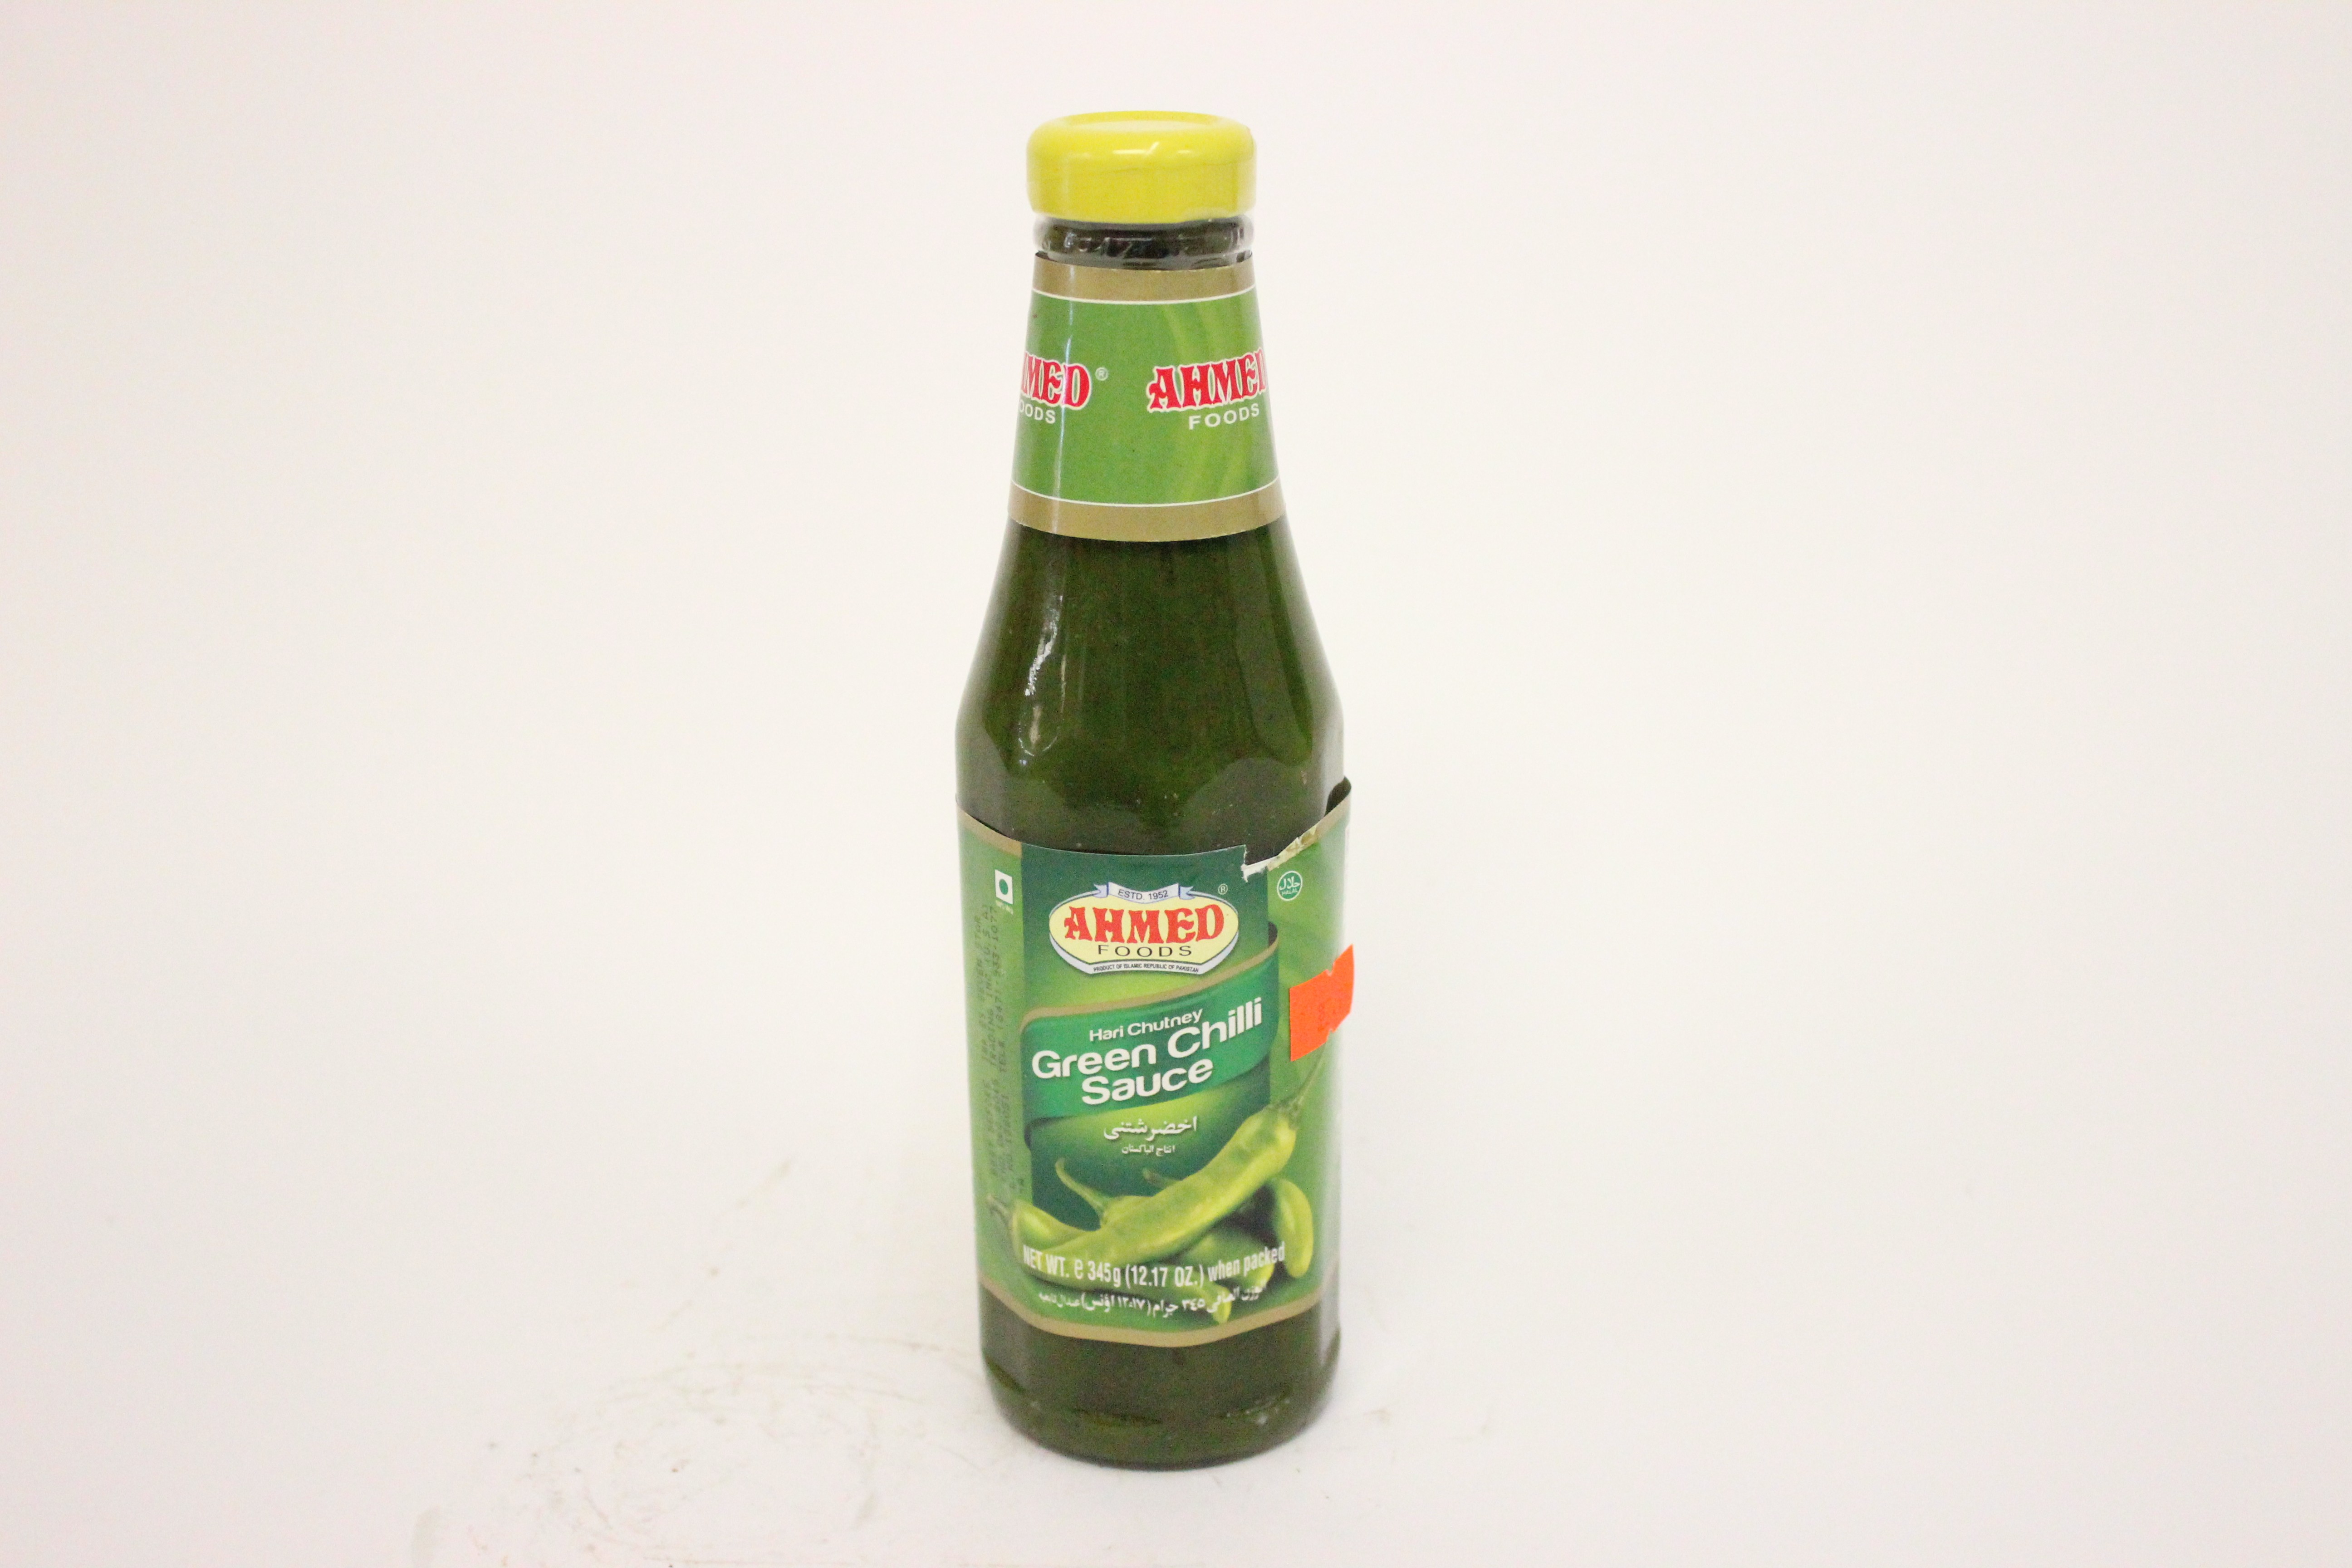 Ahmed Green Chilli Sauce 28.21 oz